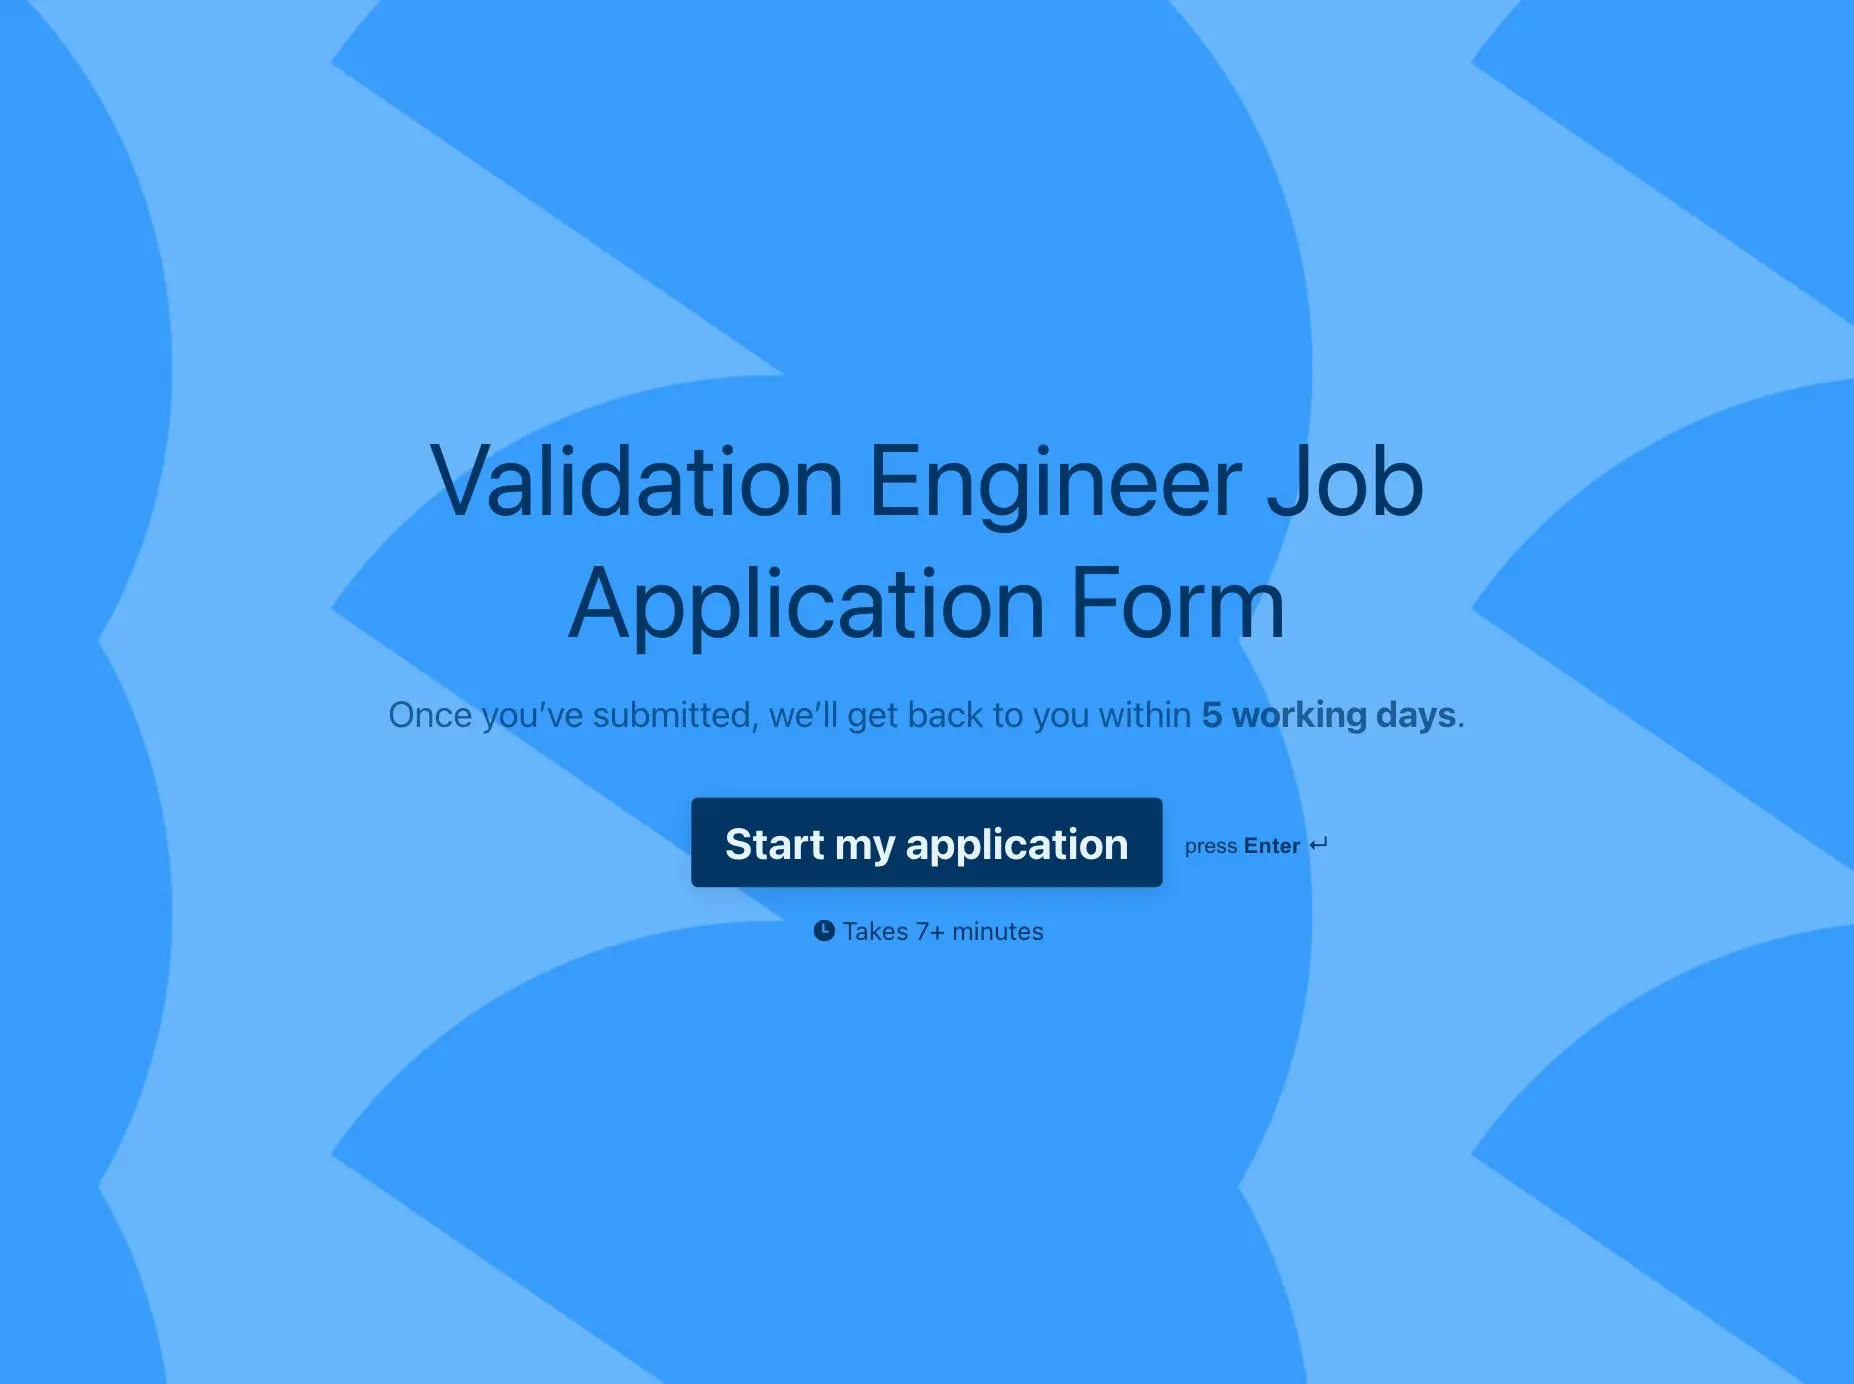 Validation Engineer Job Application Form Template Hero